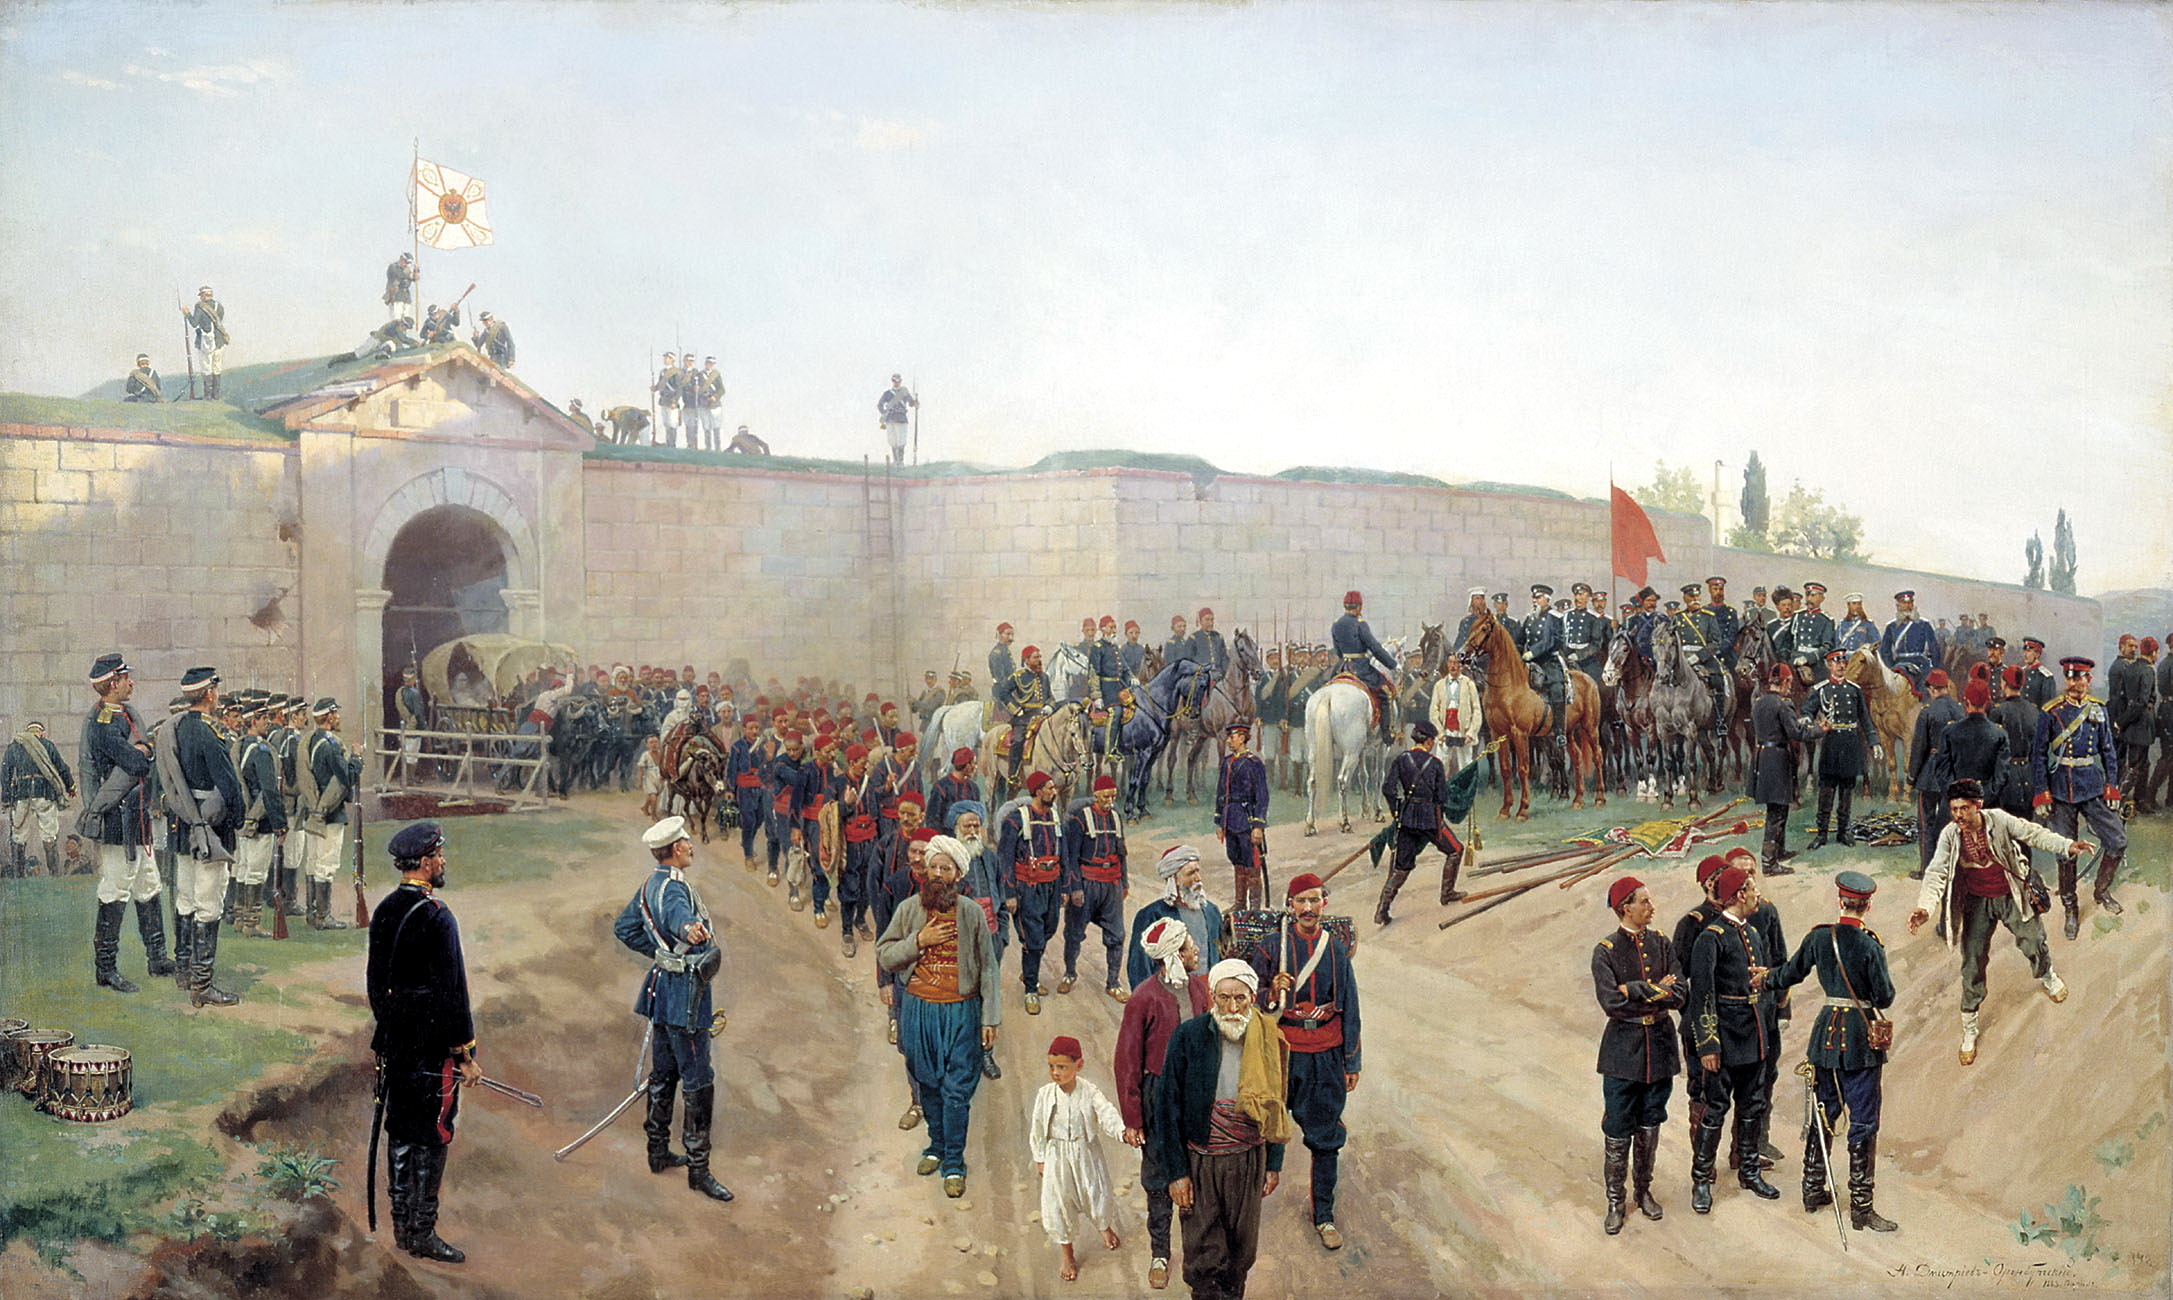 Ottoman capitulation at Nikopol in Russo-Turkish War, Nikolai Dmitriev-Orenburgsky, 1883